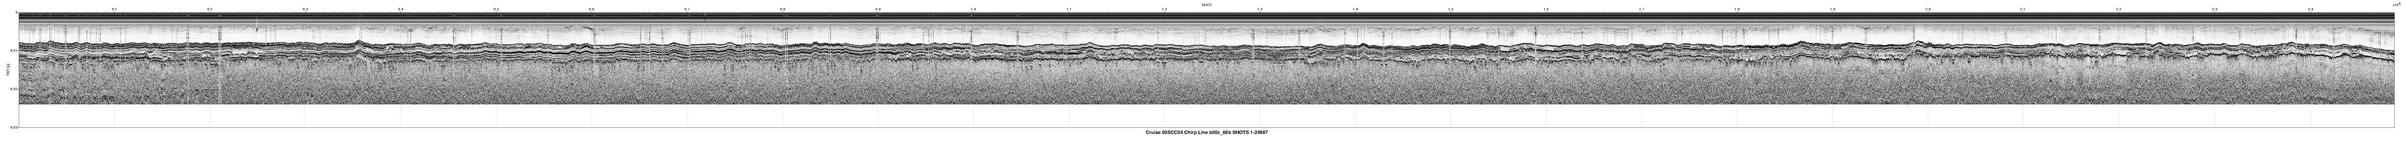 00SCC04 b00c_66b seismic profile image